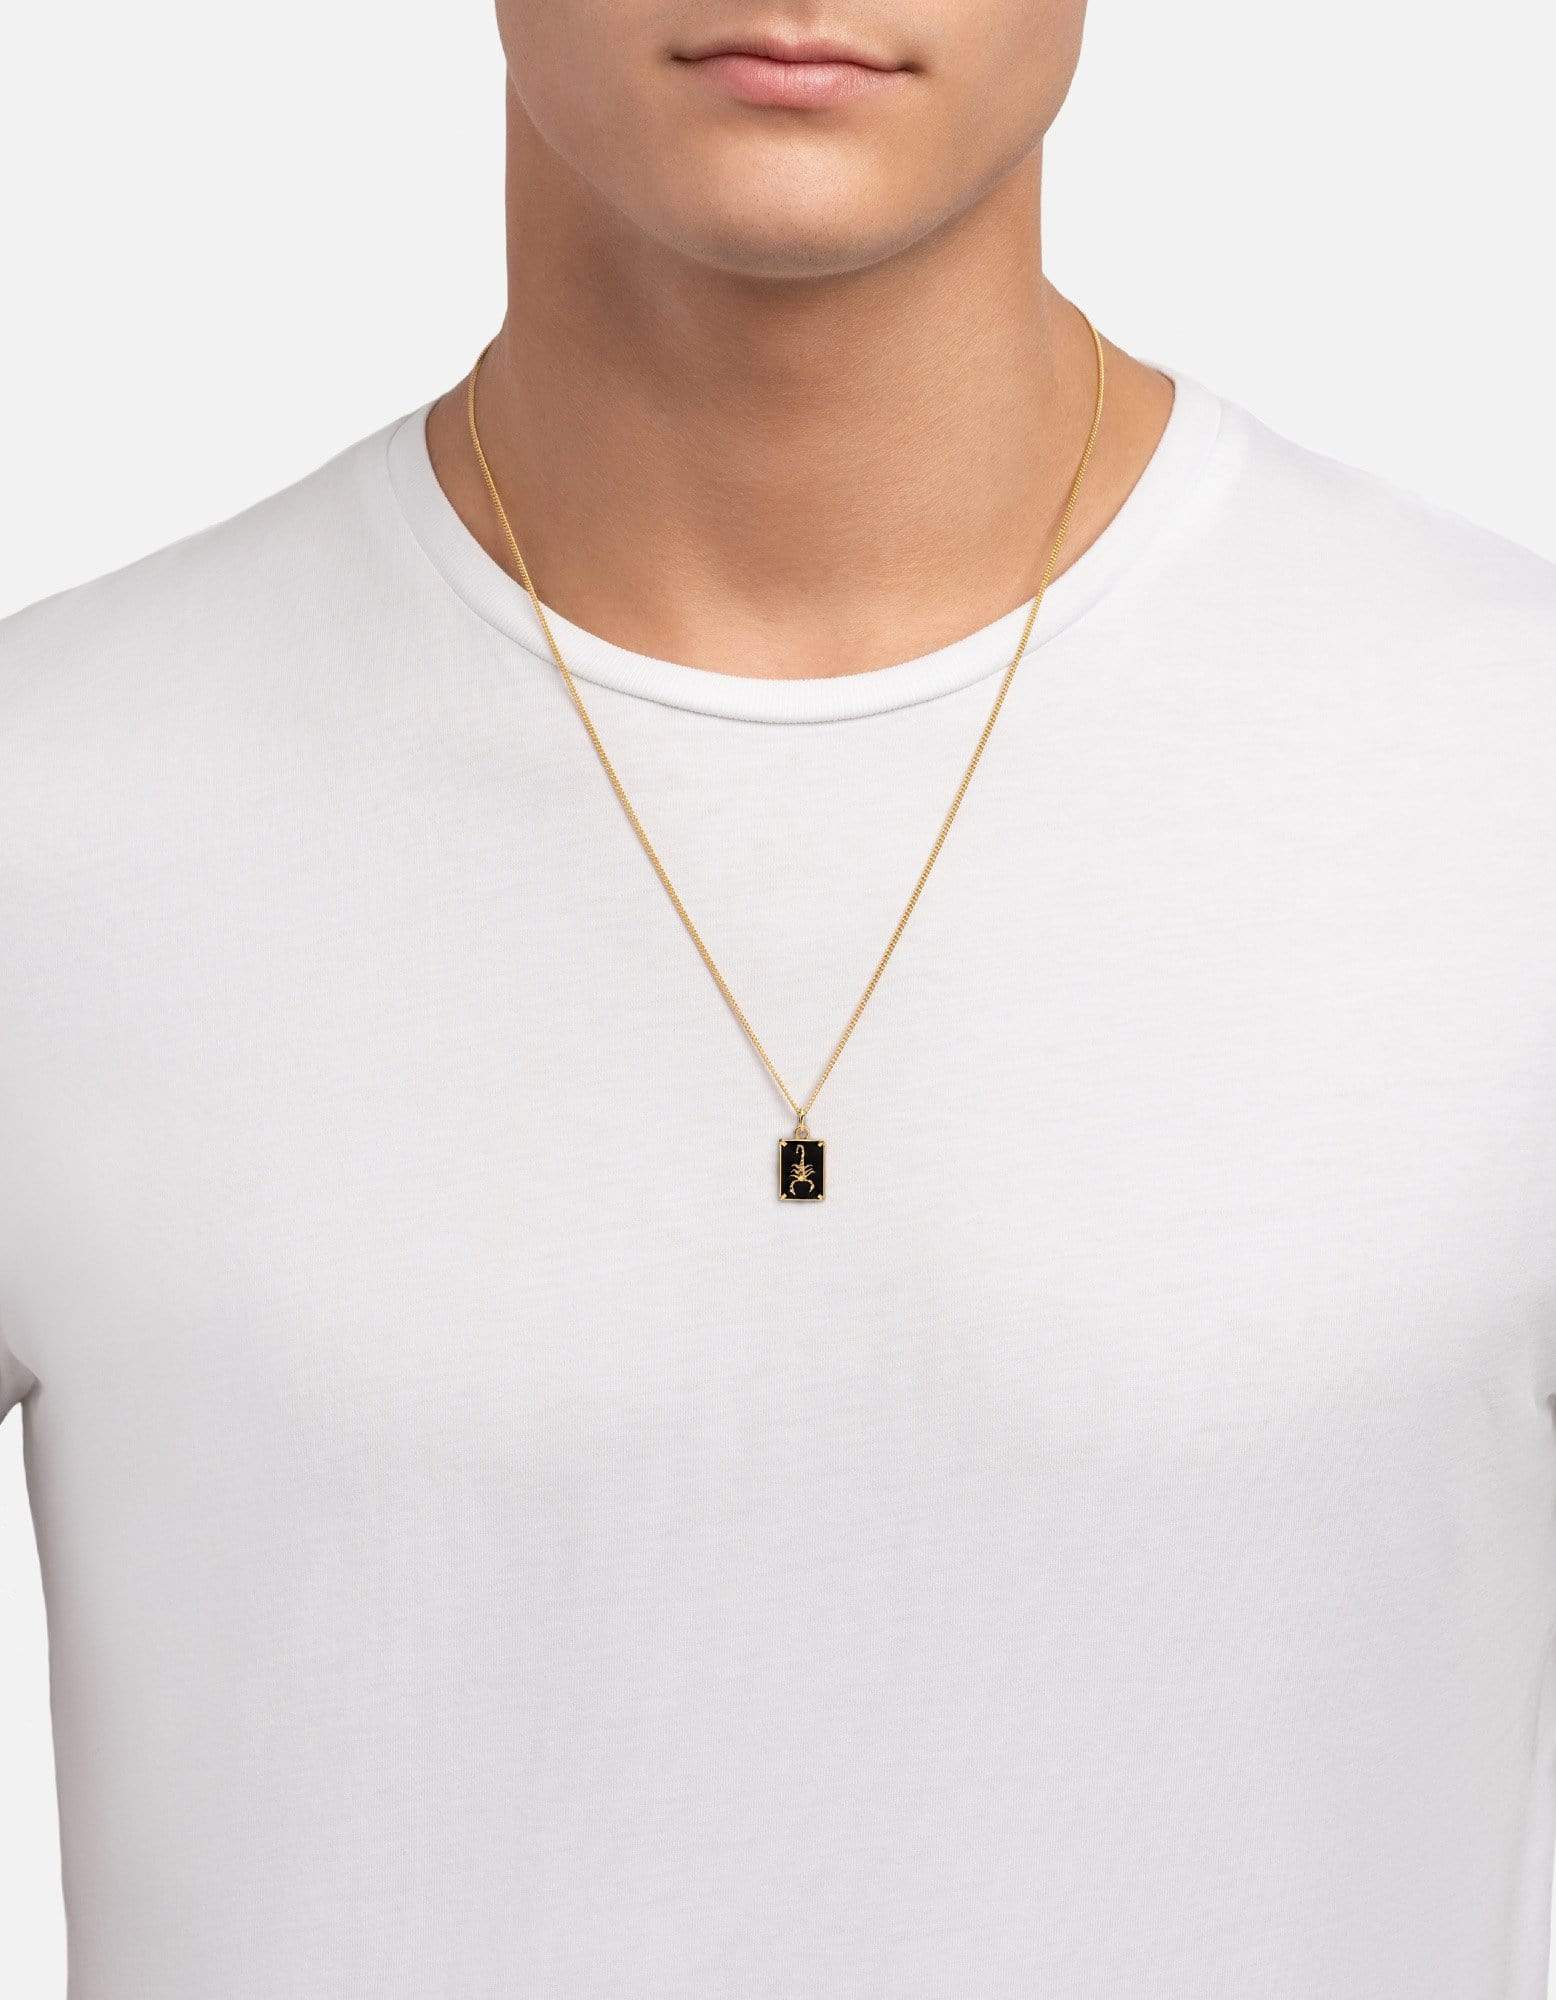 Scorpius Pendant Necklace, Gold Vermeil/Black